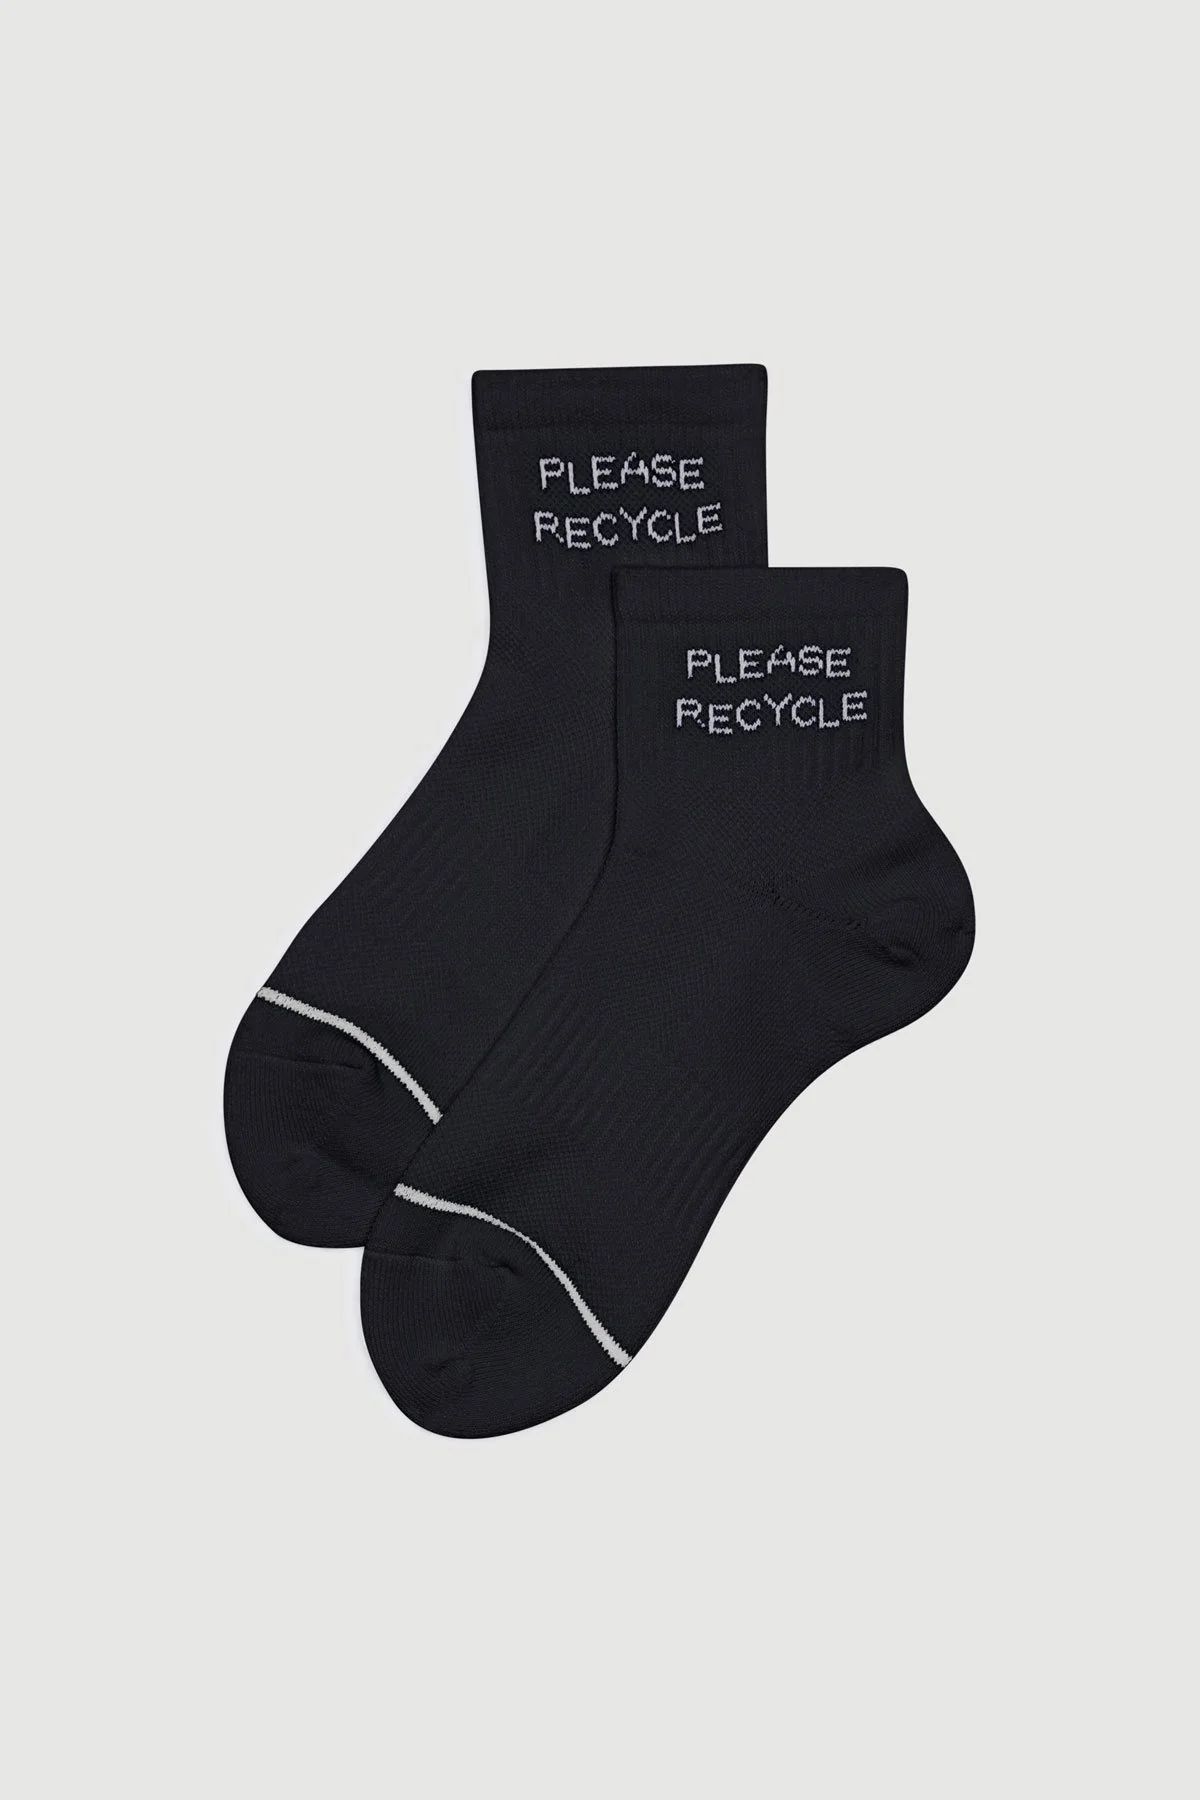 Black Please Recycle Quarter Crew Sock | Girlfriend Collective